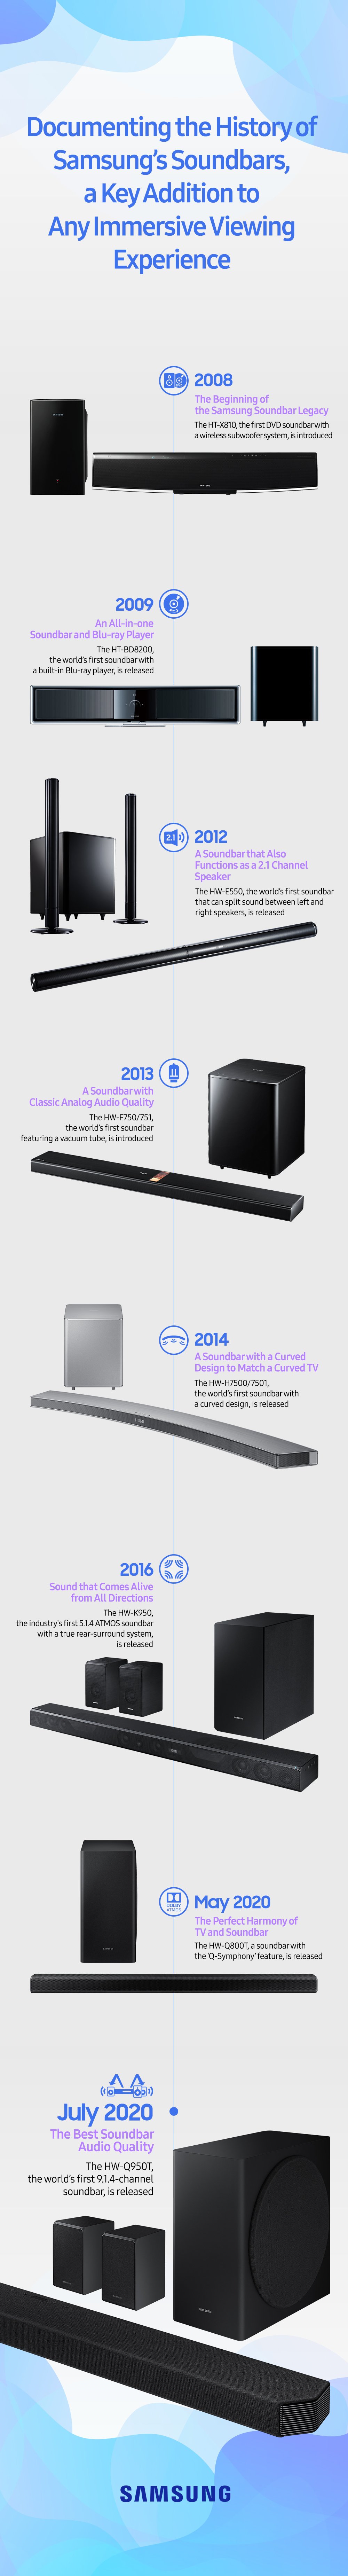 Samsung Soundbar Achievements History Milestone Infographic